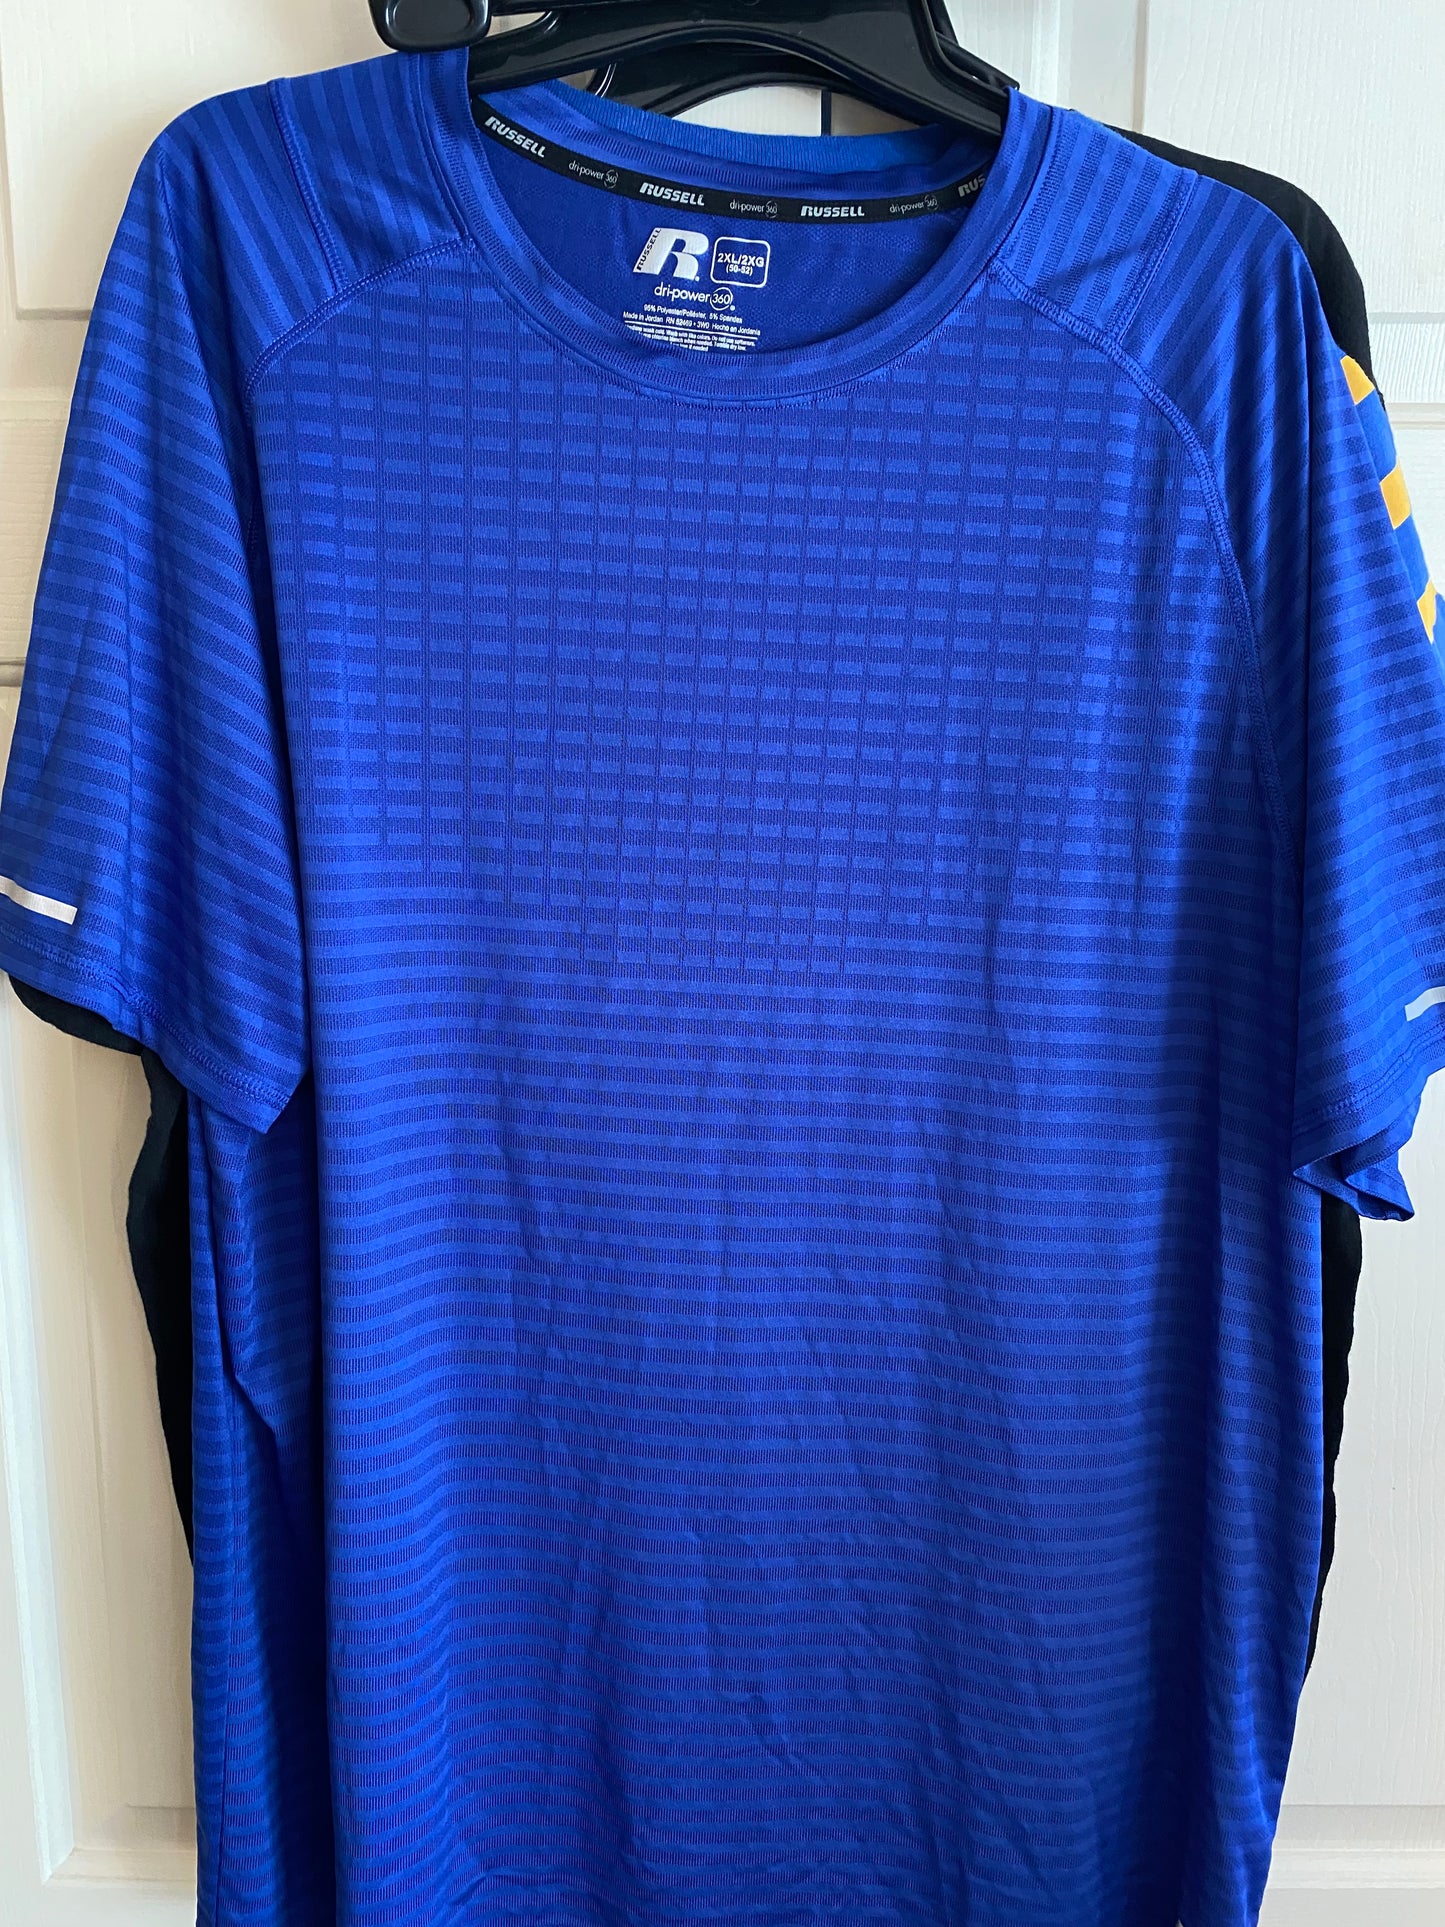 Russell Dri-Power 360 Active Fashion T-Shirt Size 2XL/2XG (50-52) Purple Blue